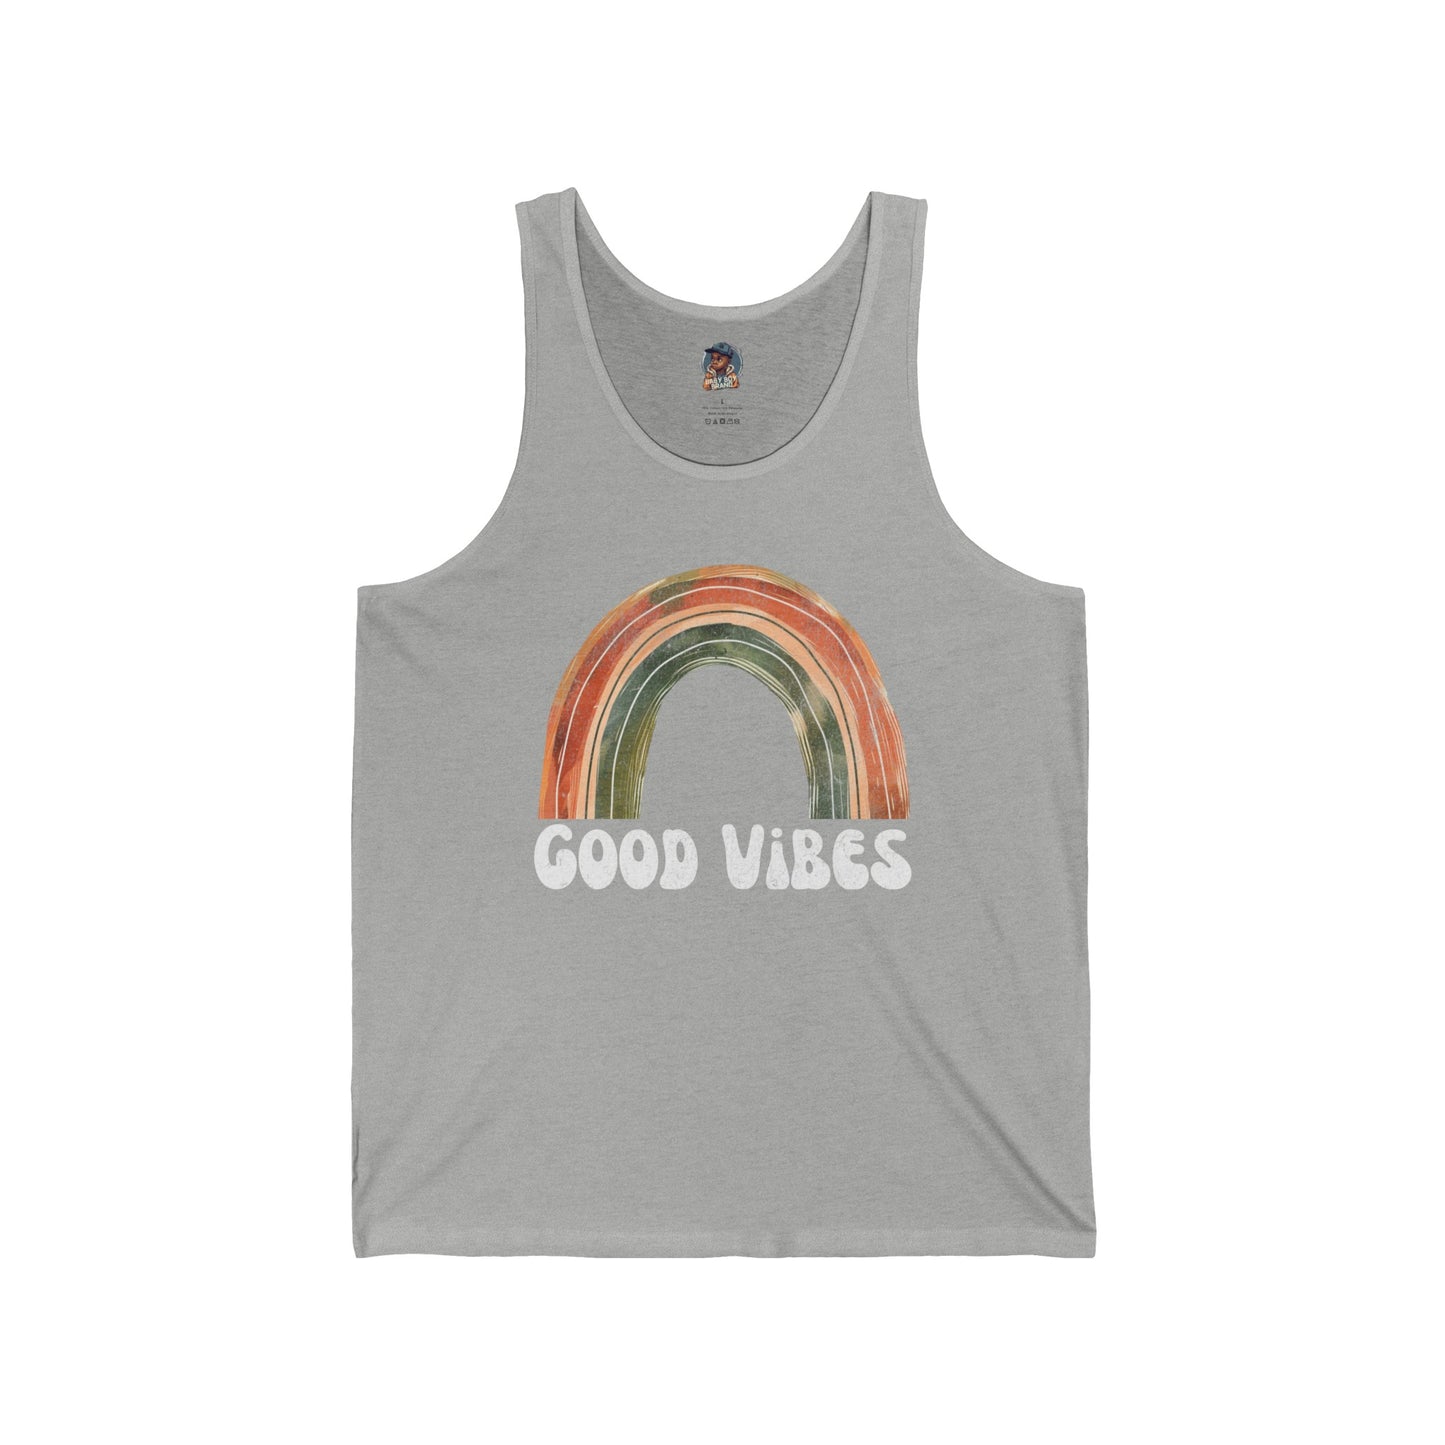 "Good Vibes"